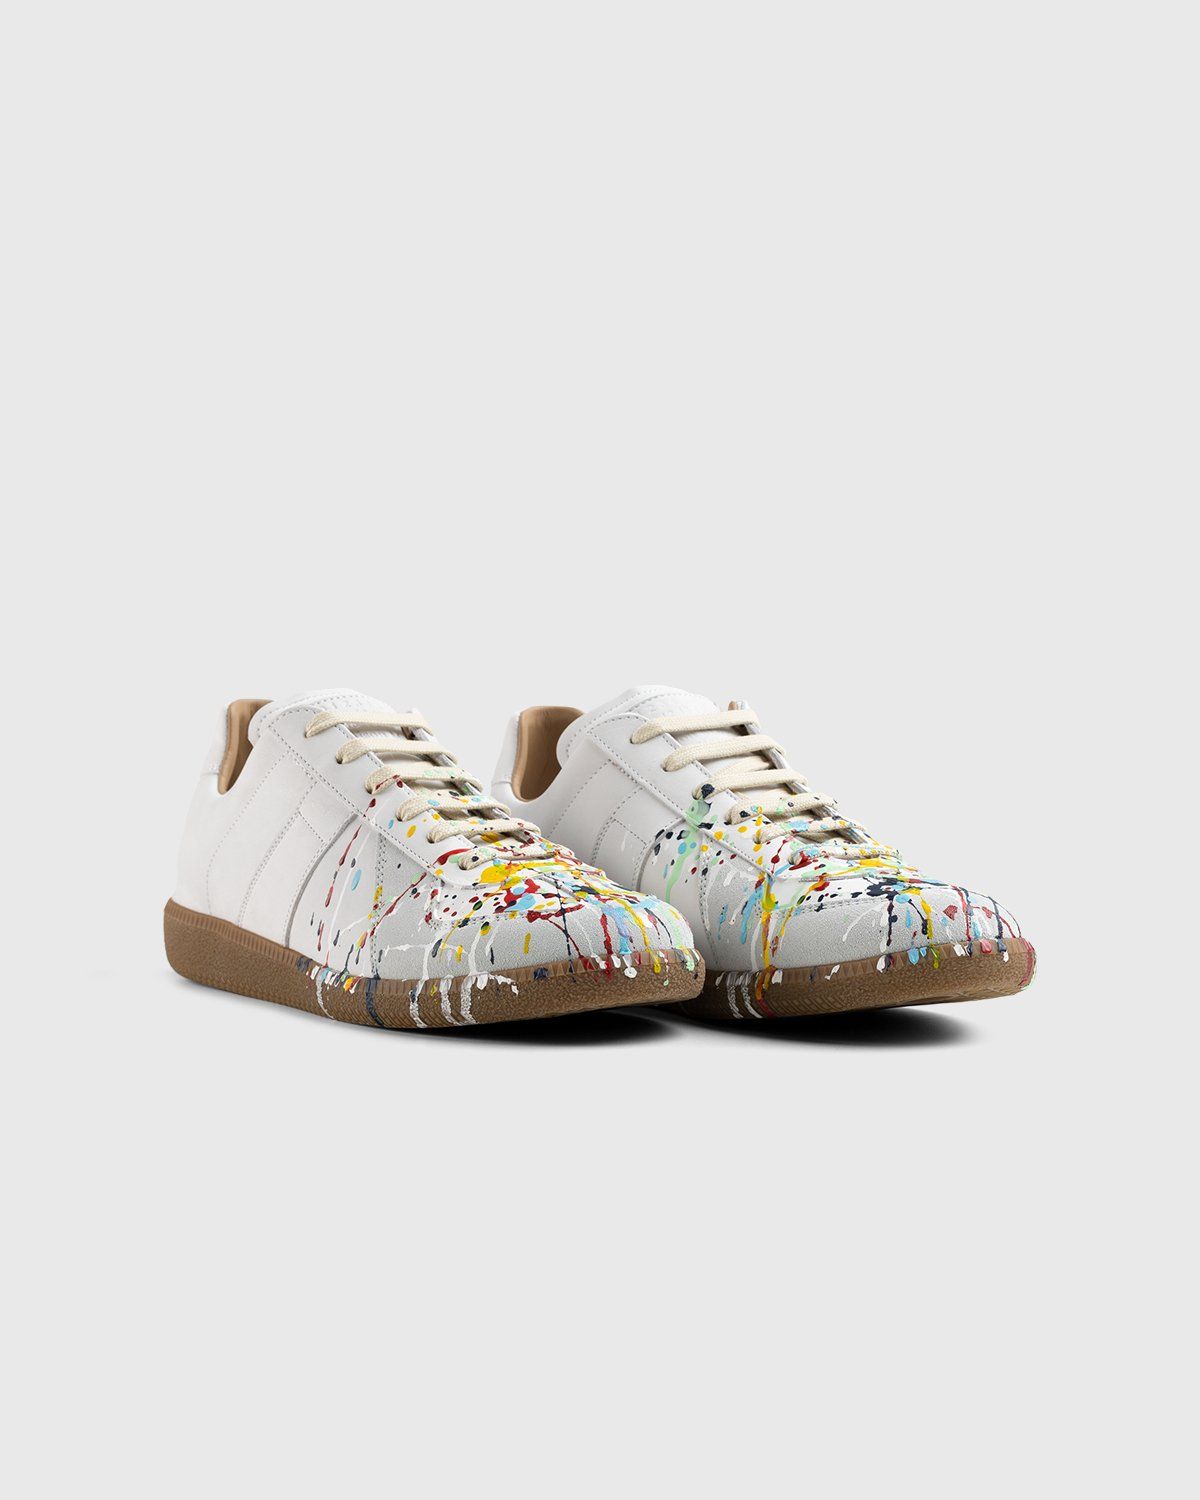 Maison Margiela – Replica Paint Drop Sneakers White - Sneakers - White - Image 2